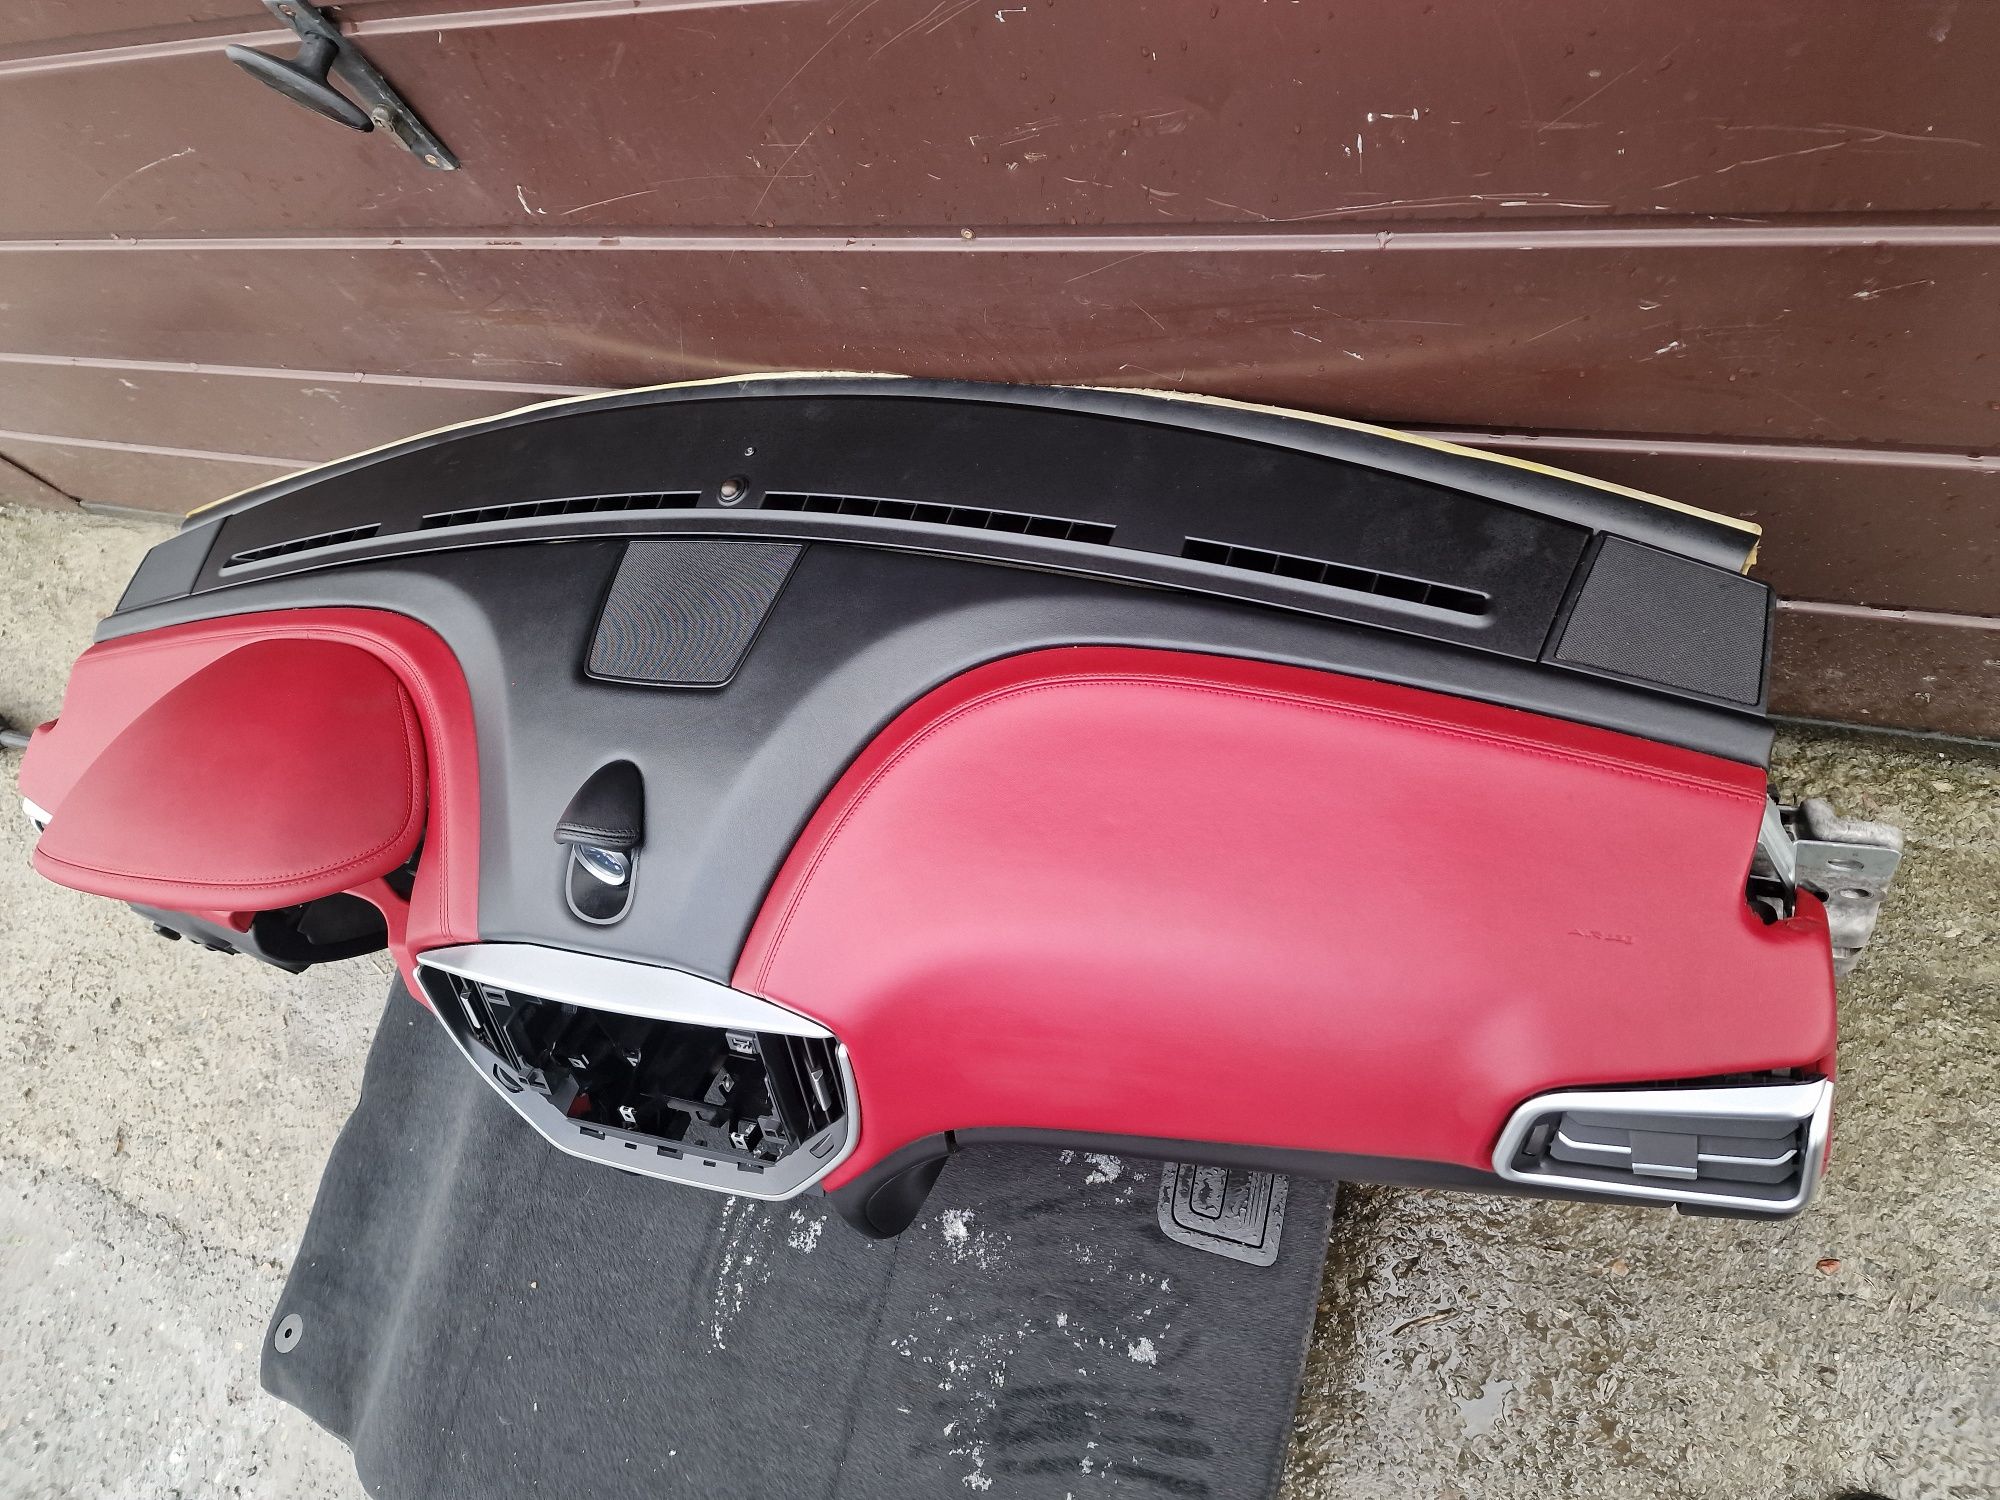 Maserati ghibli Deska konsola airbag pasy przod oryginal nie regenerow